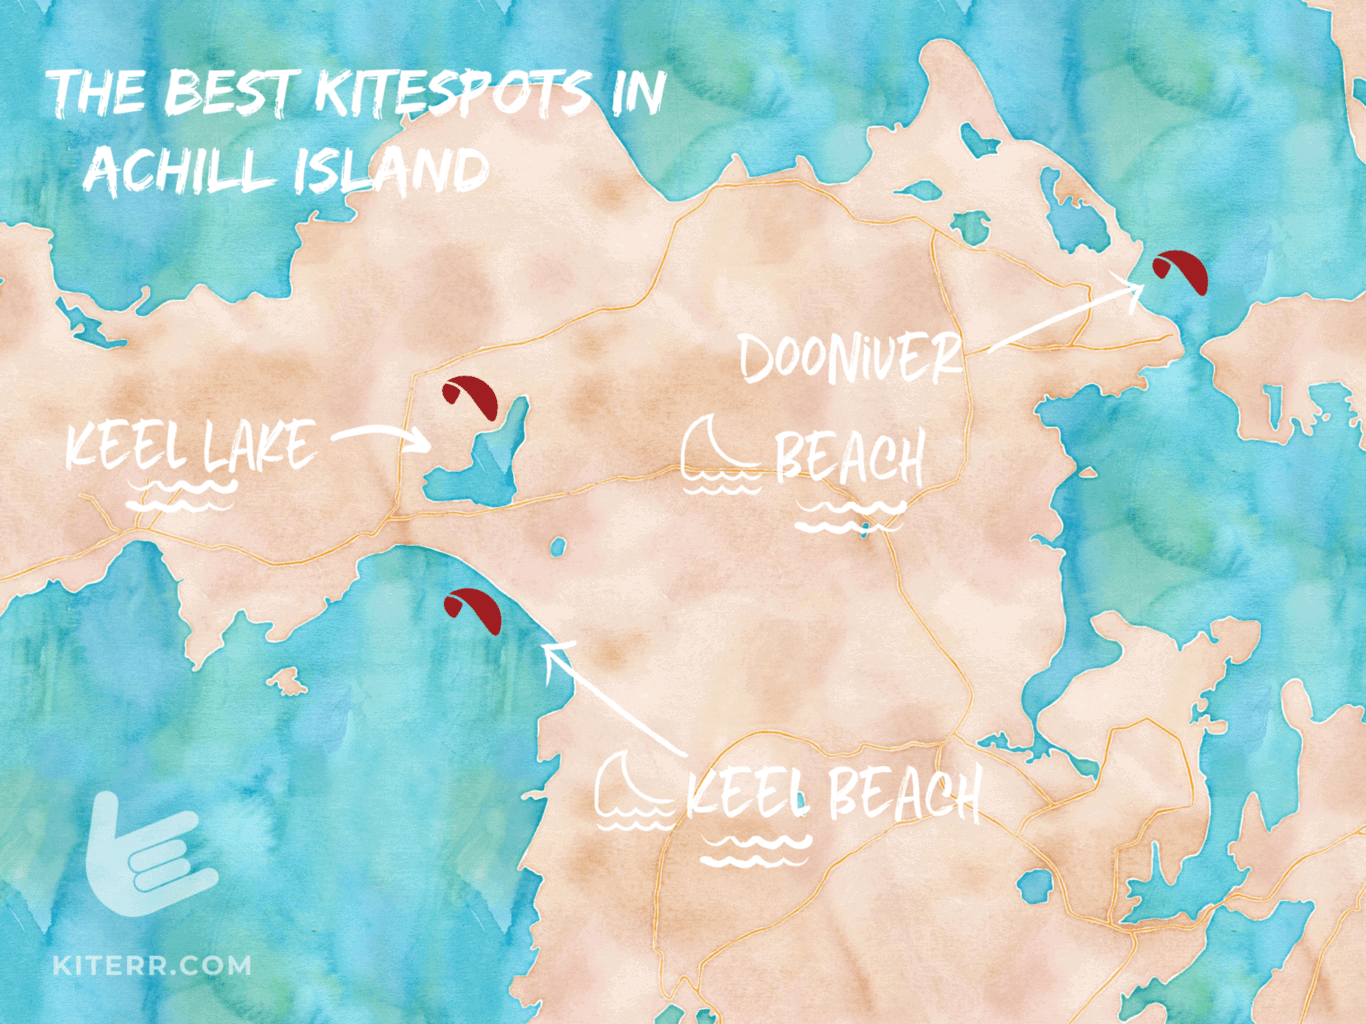 A map of the best kiteboarding spots in Ireland's Achill Island // Kiterrcom